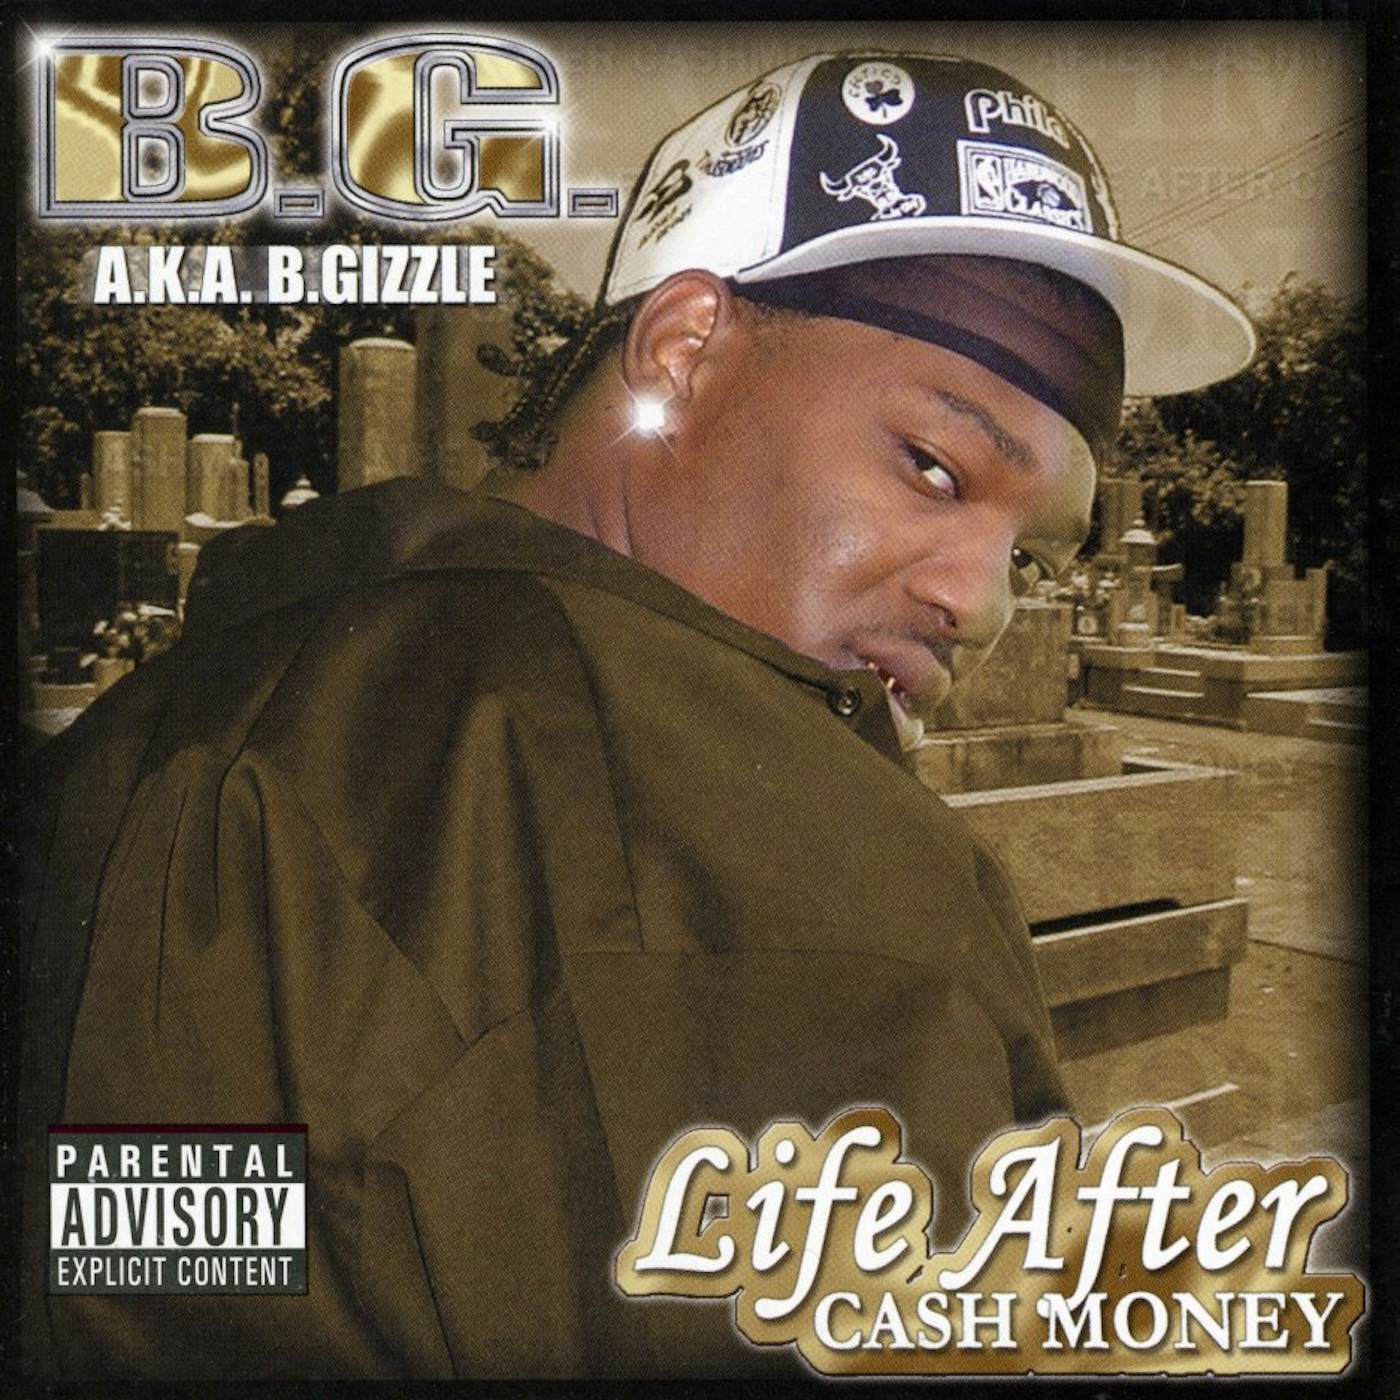 BG LIFE AFTER CASH MONEY CD